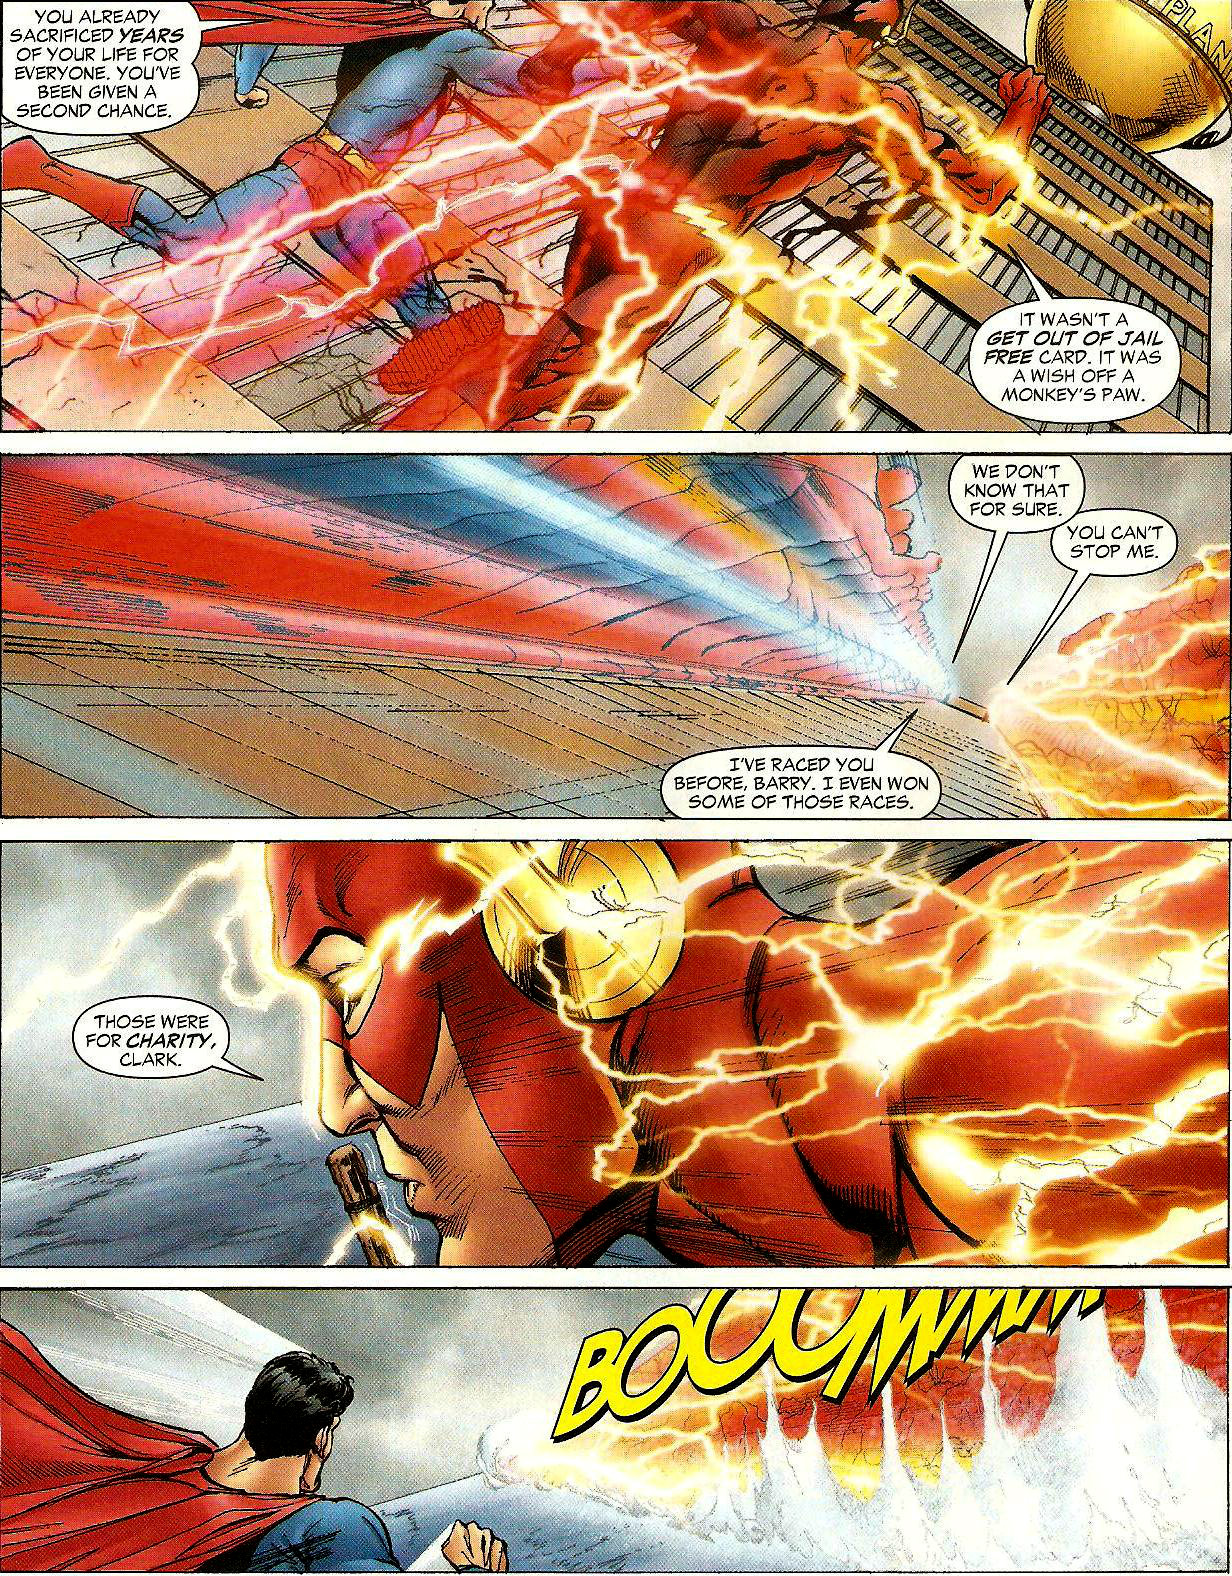 From Flash Rebirth #3 (2009)